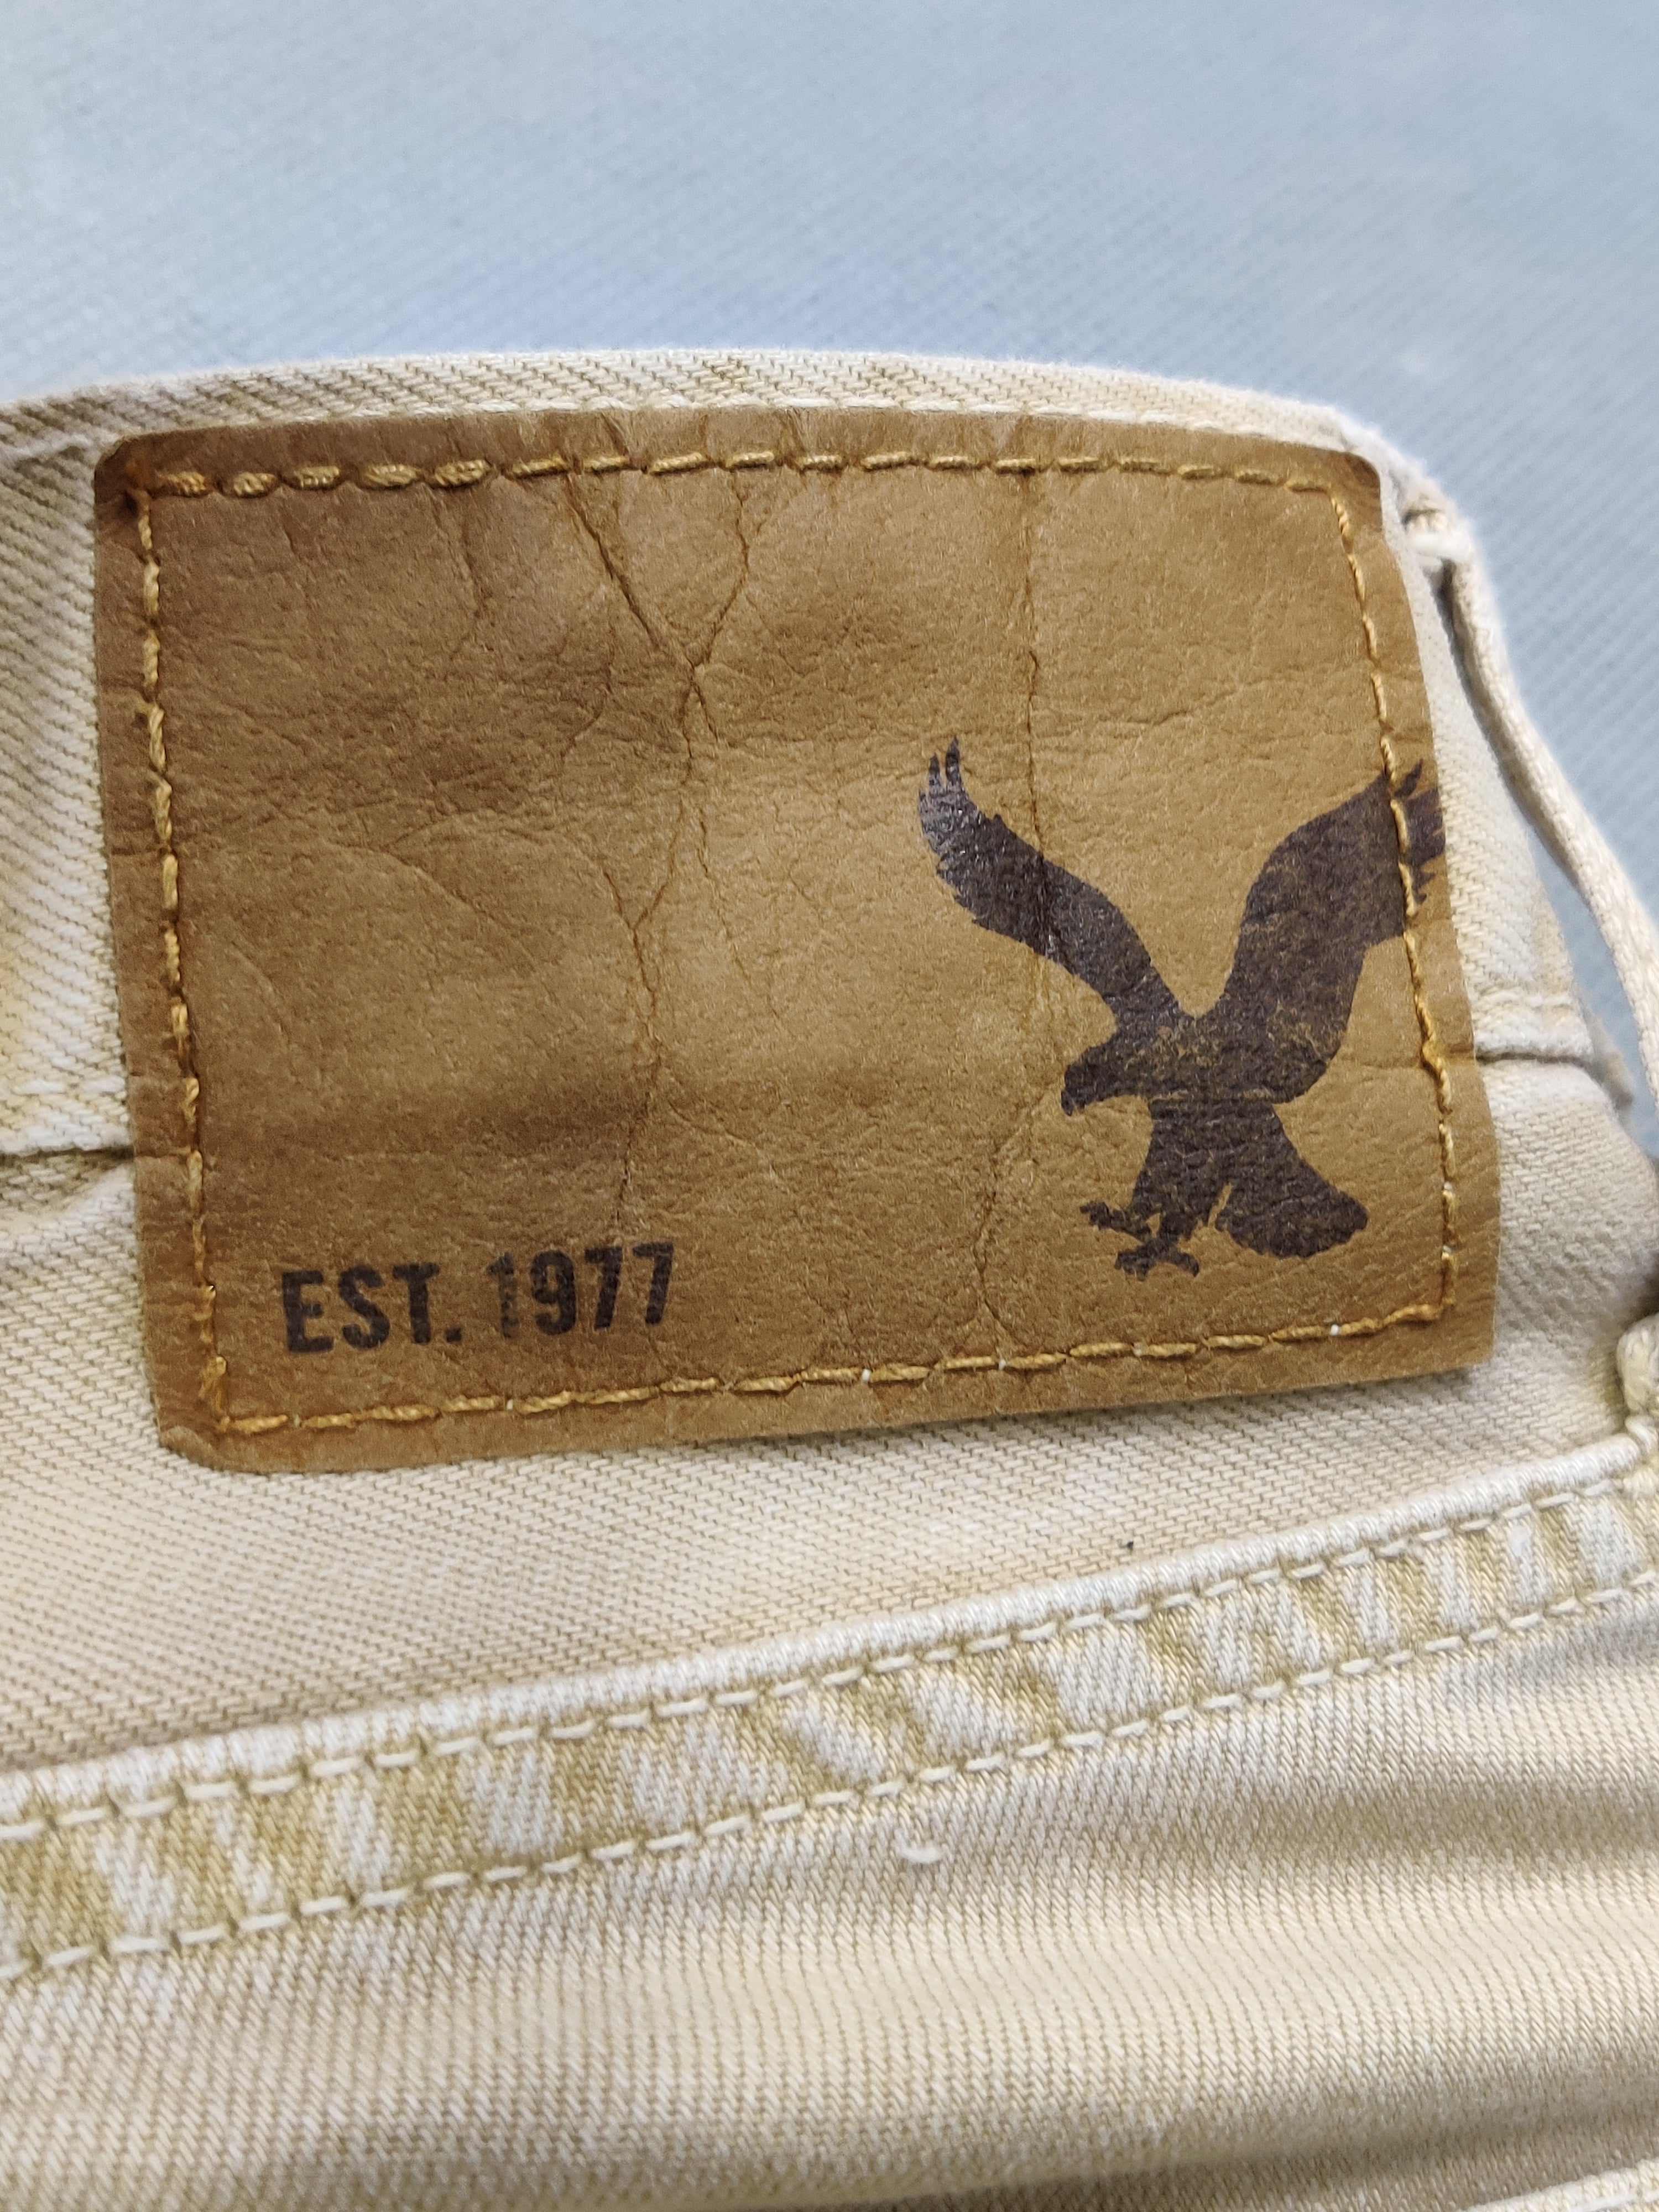 American Eagle Outfitters Branded Original Denim Jeans For Men